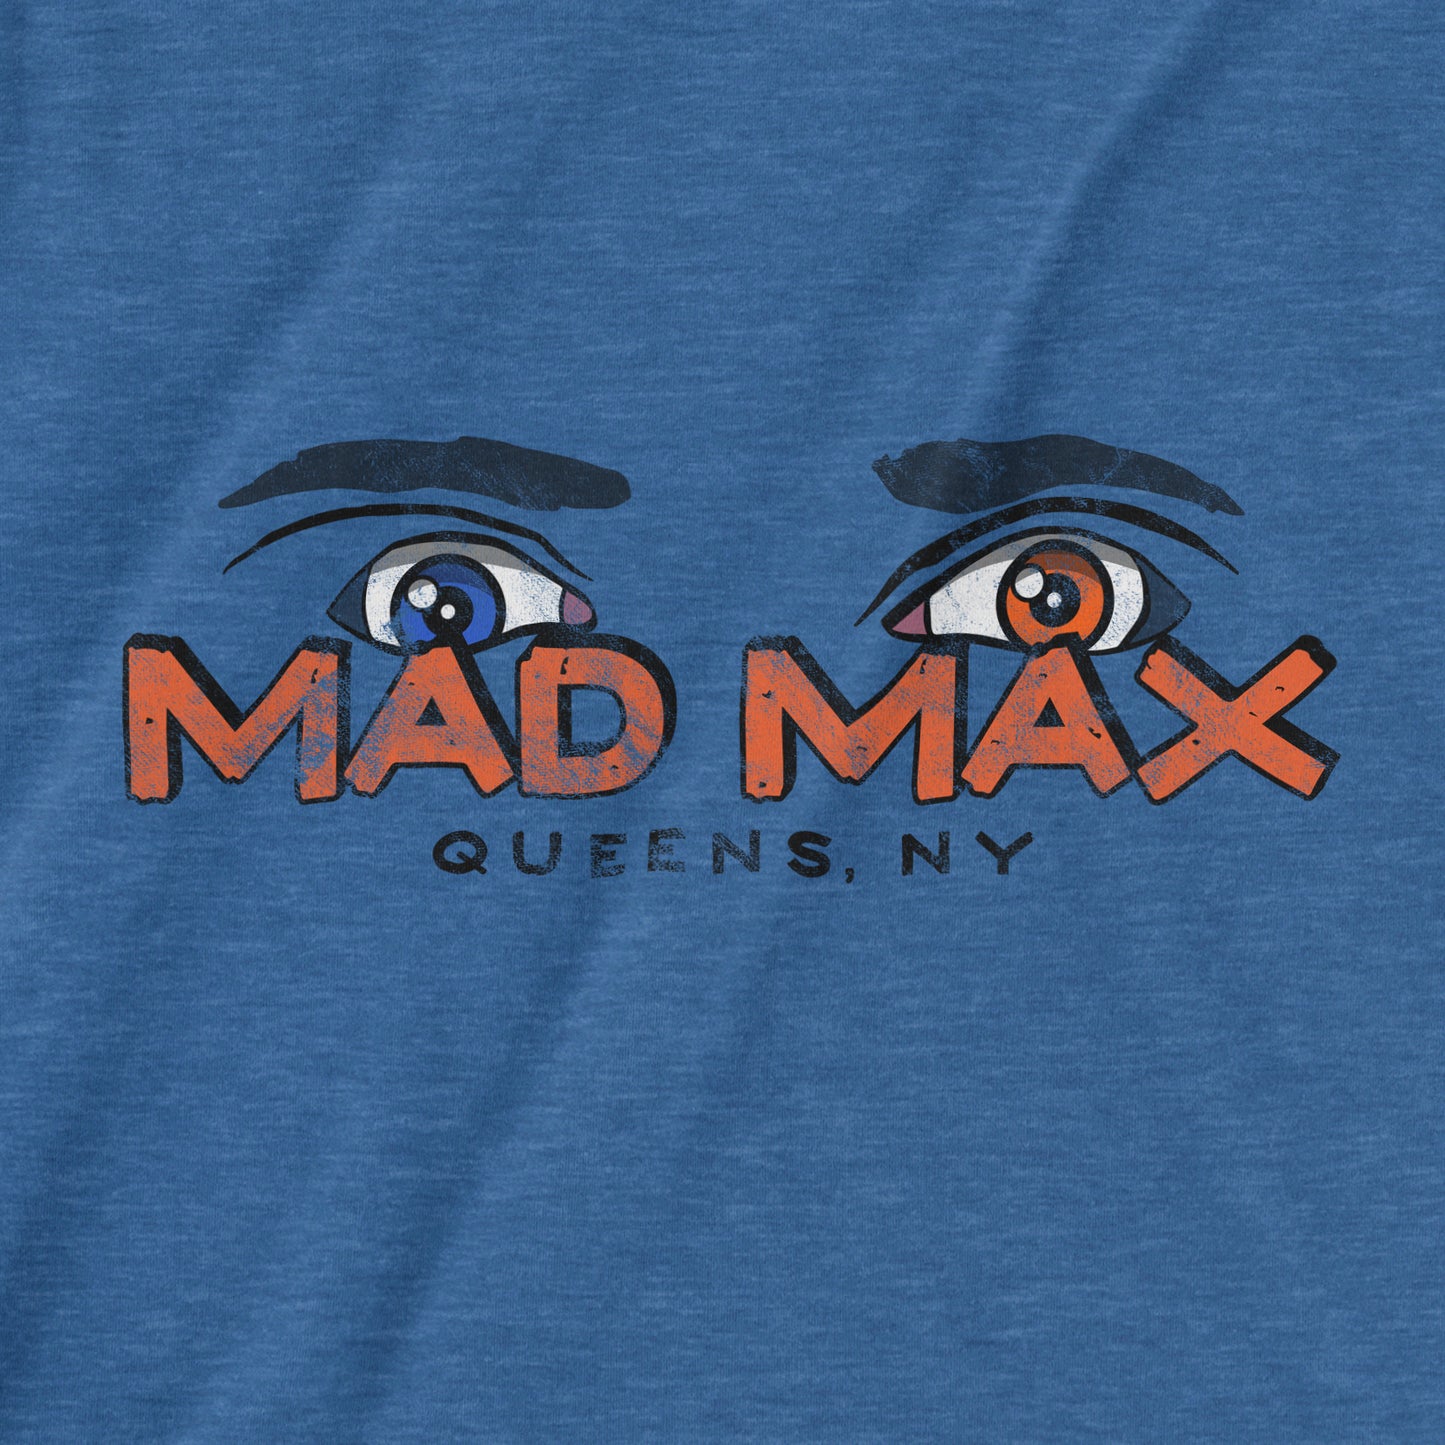 Mad Max | T-Shirt